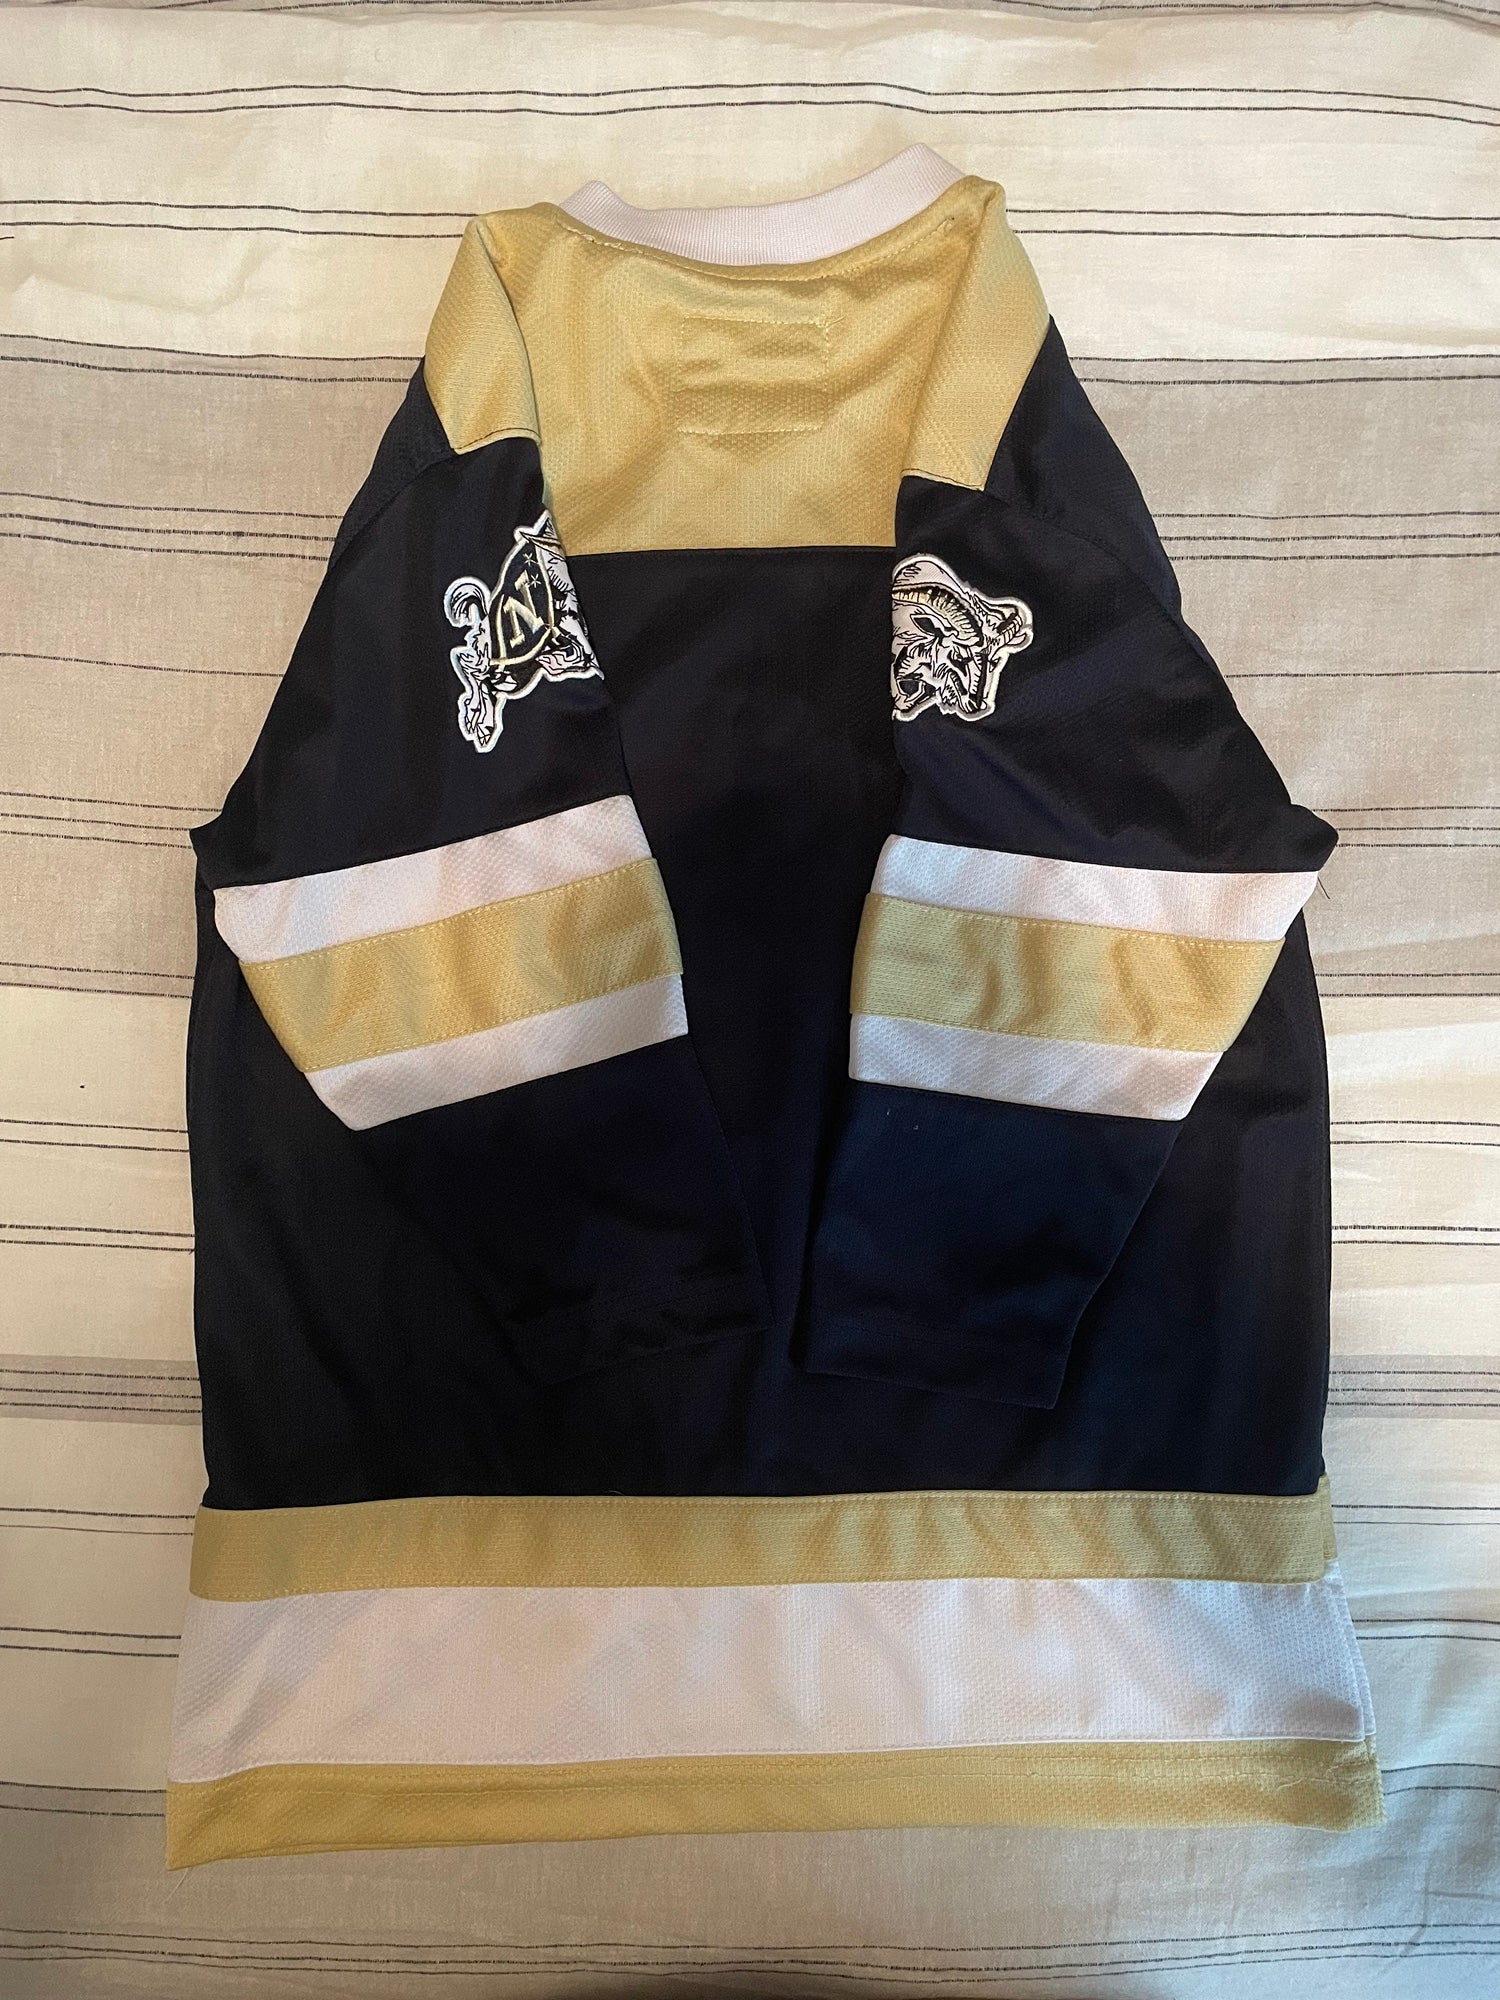 Nevermore Academy Lace-Up Hockey Jersey Sweater Youth Medium